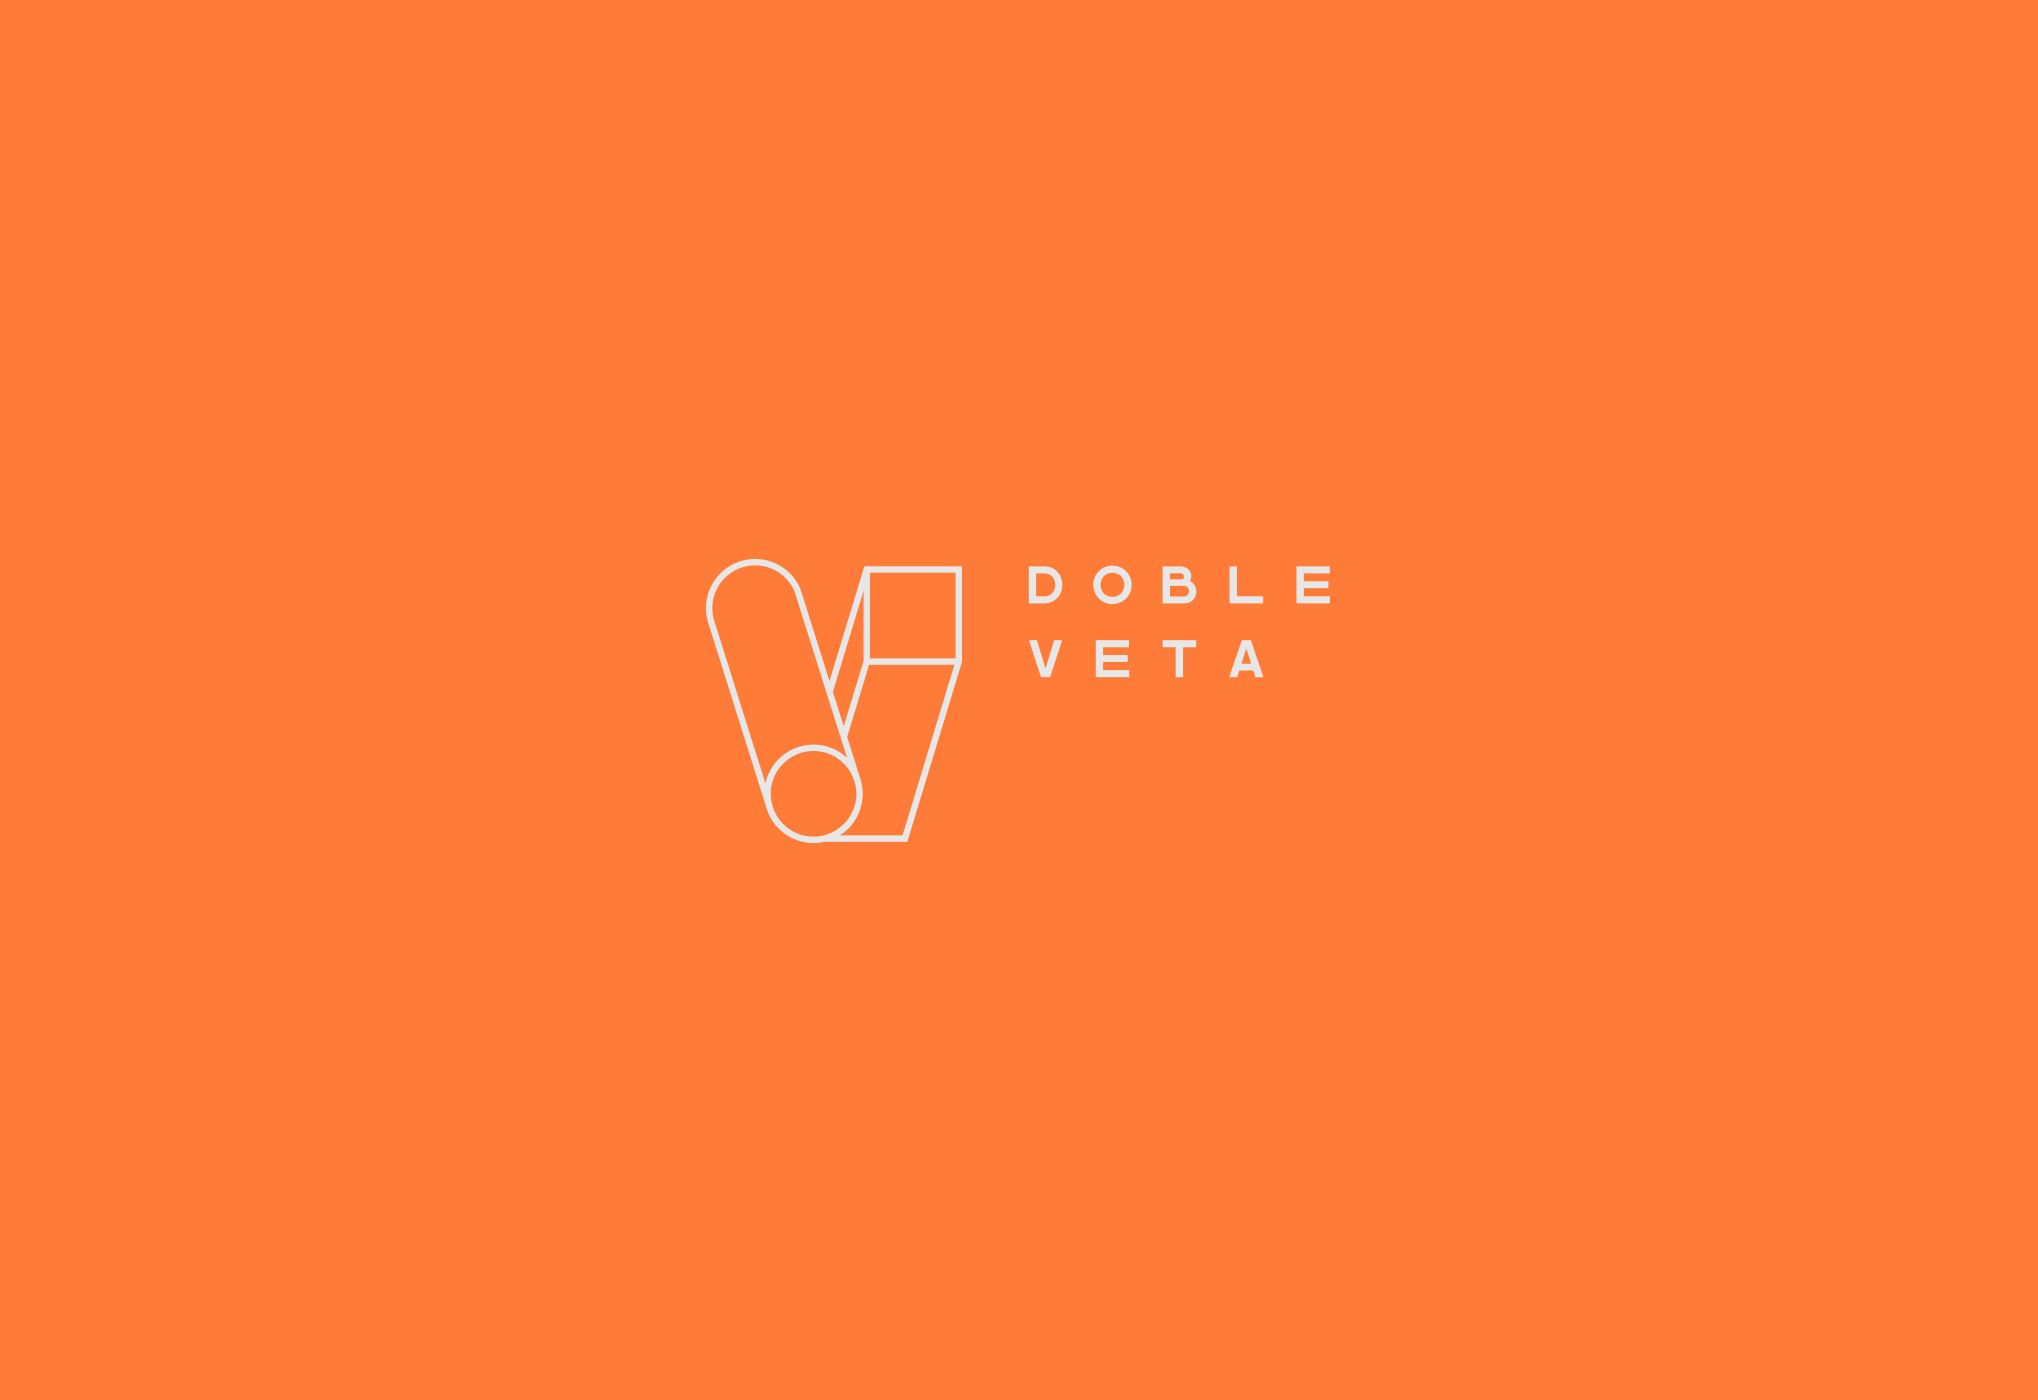 Doble Veta - Visual Identity & Branding